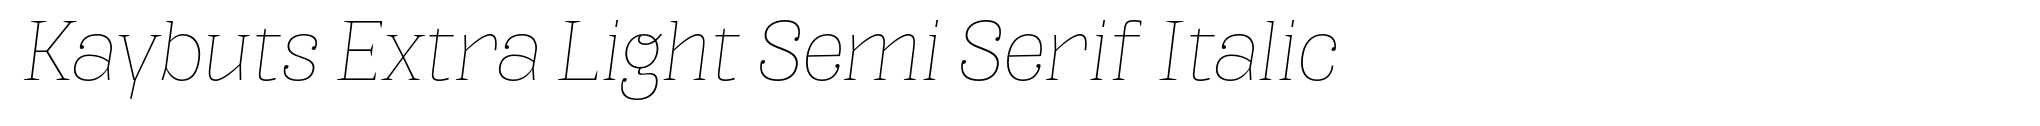 Kaybuts Extra Light Semi Serif Italic image